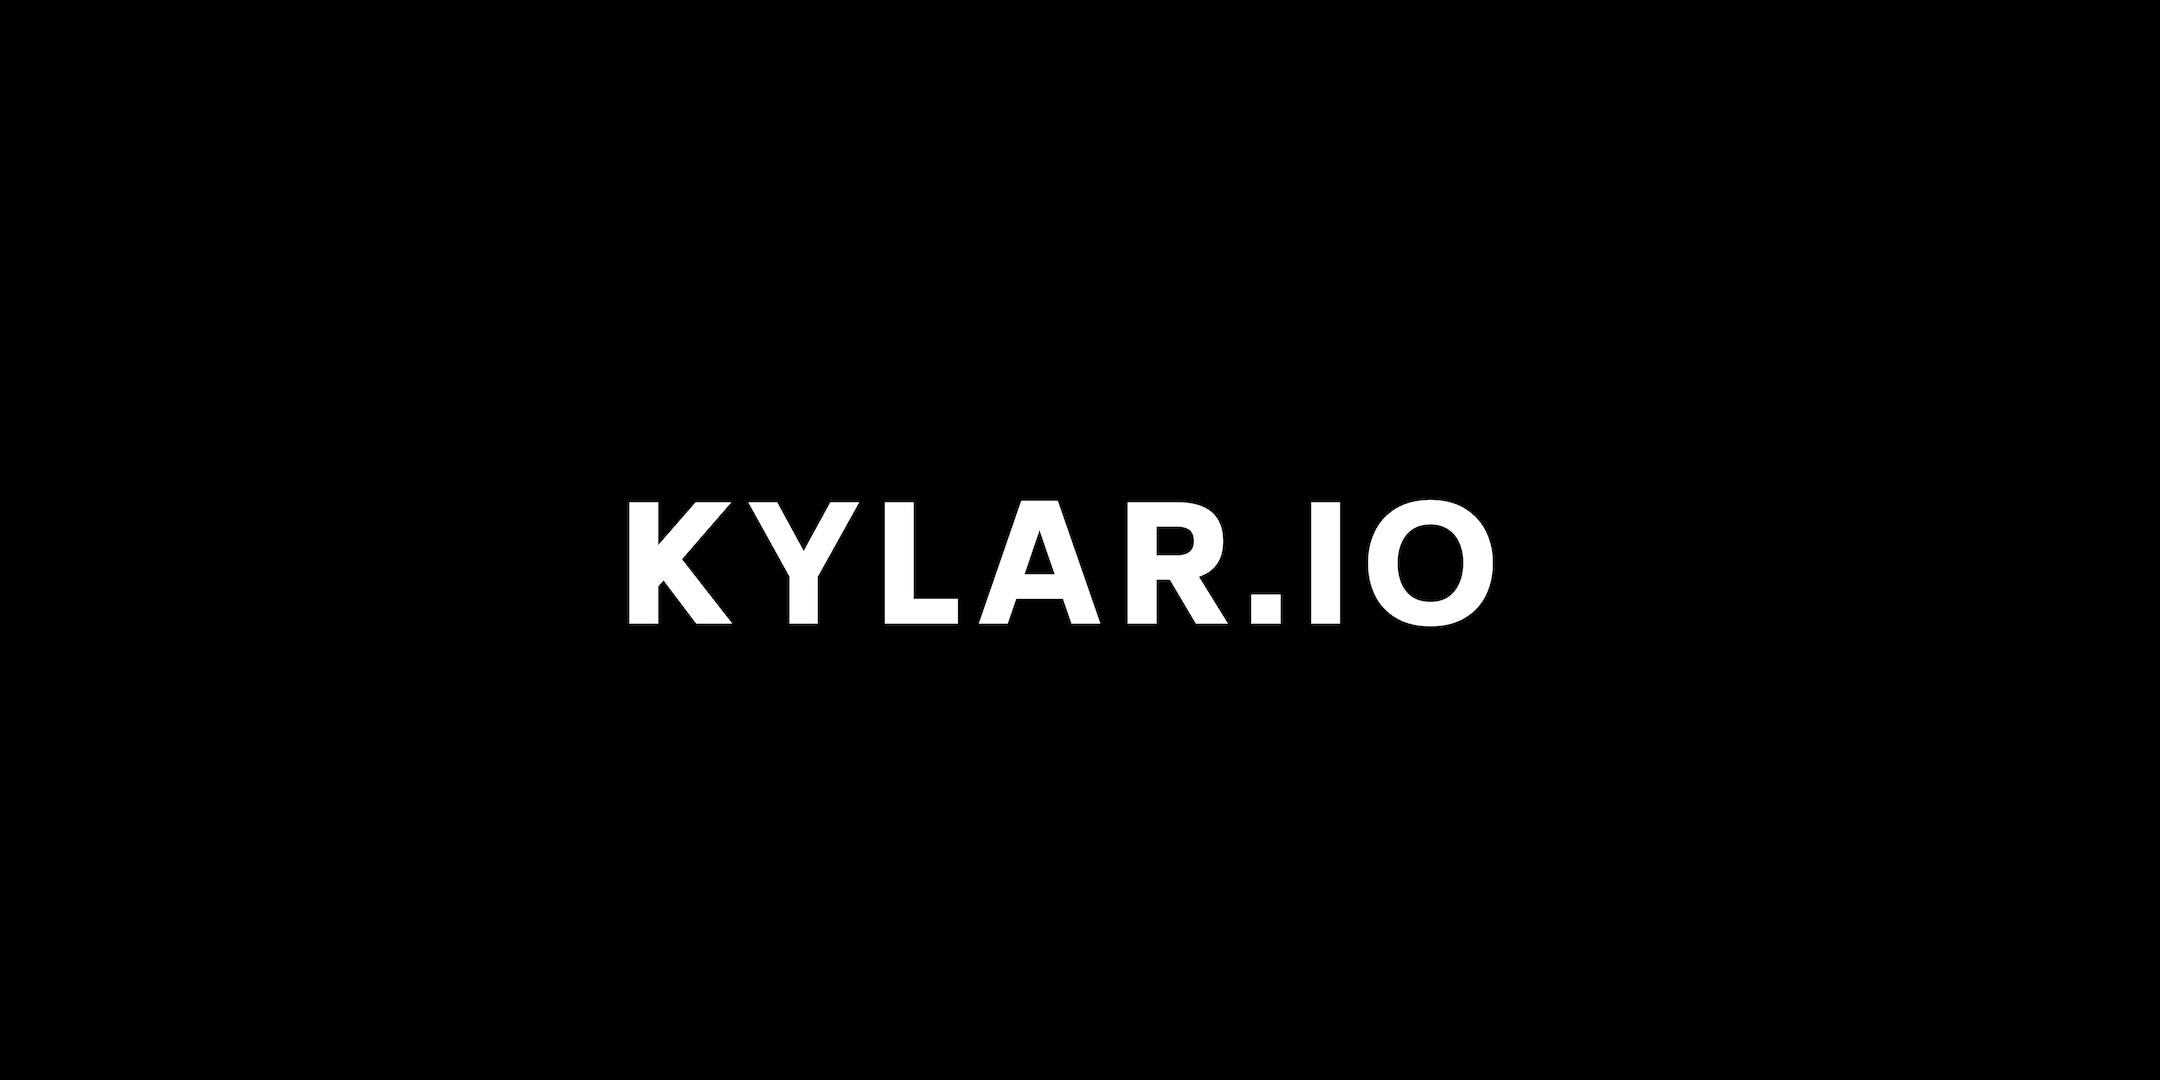 Kylar.io Blockchain Conference 2019